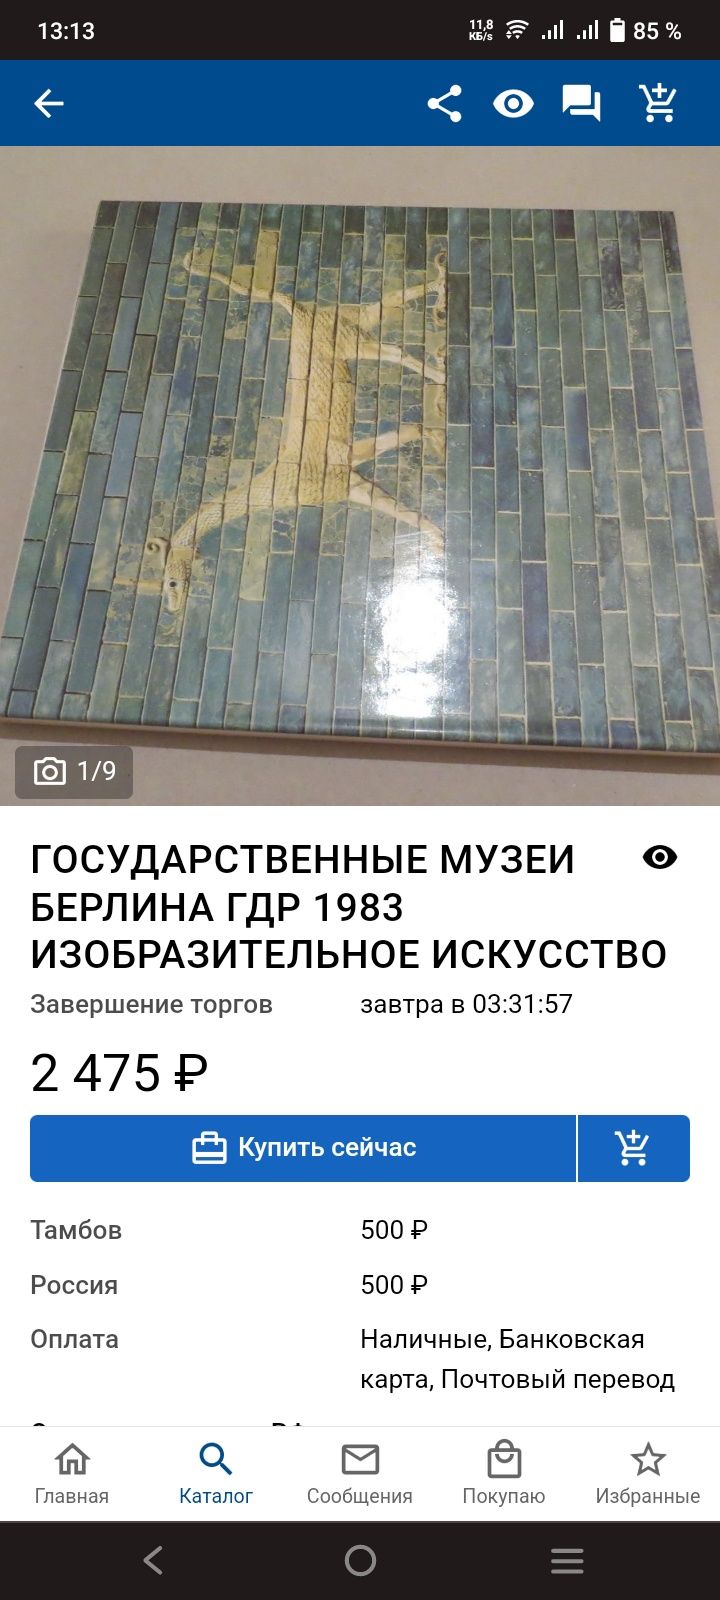 Книга Музеи Мира ГДР, Берлин, редкая в Казахстане!!!